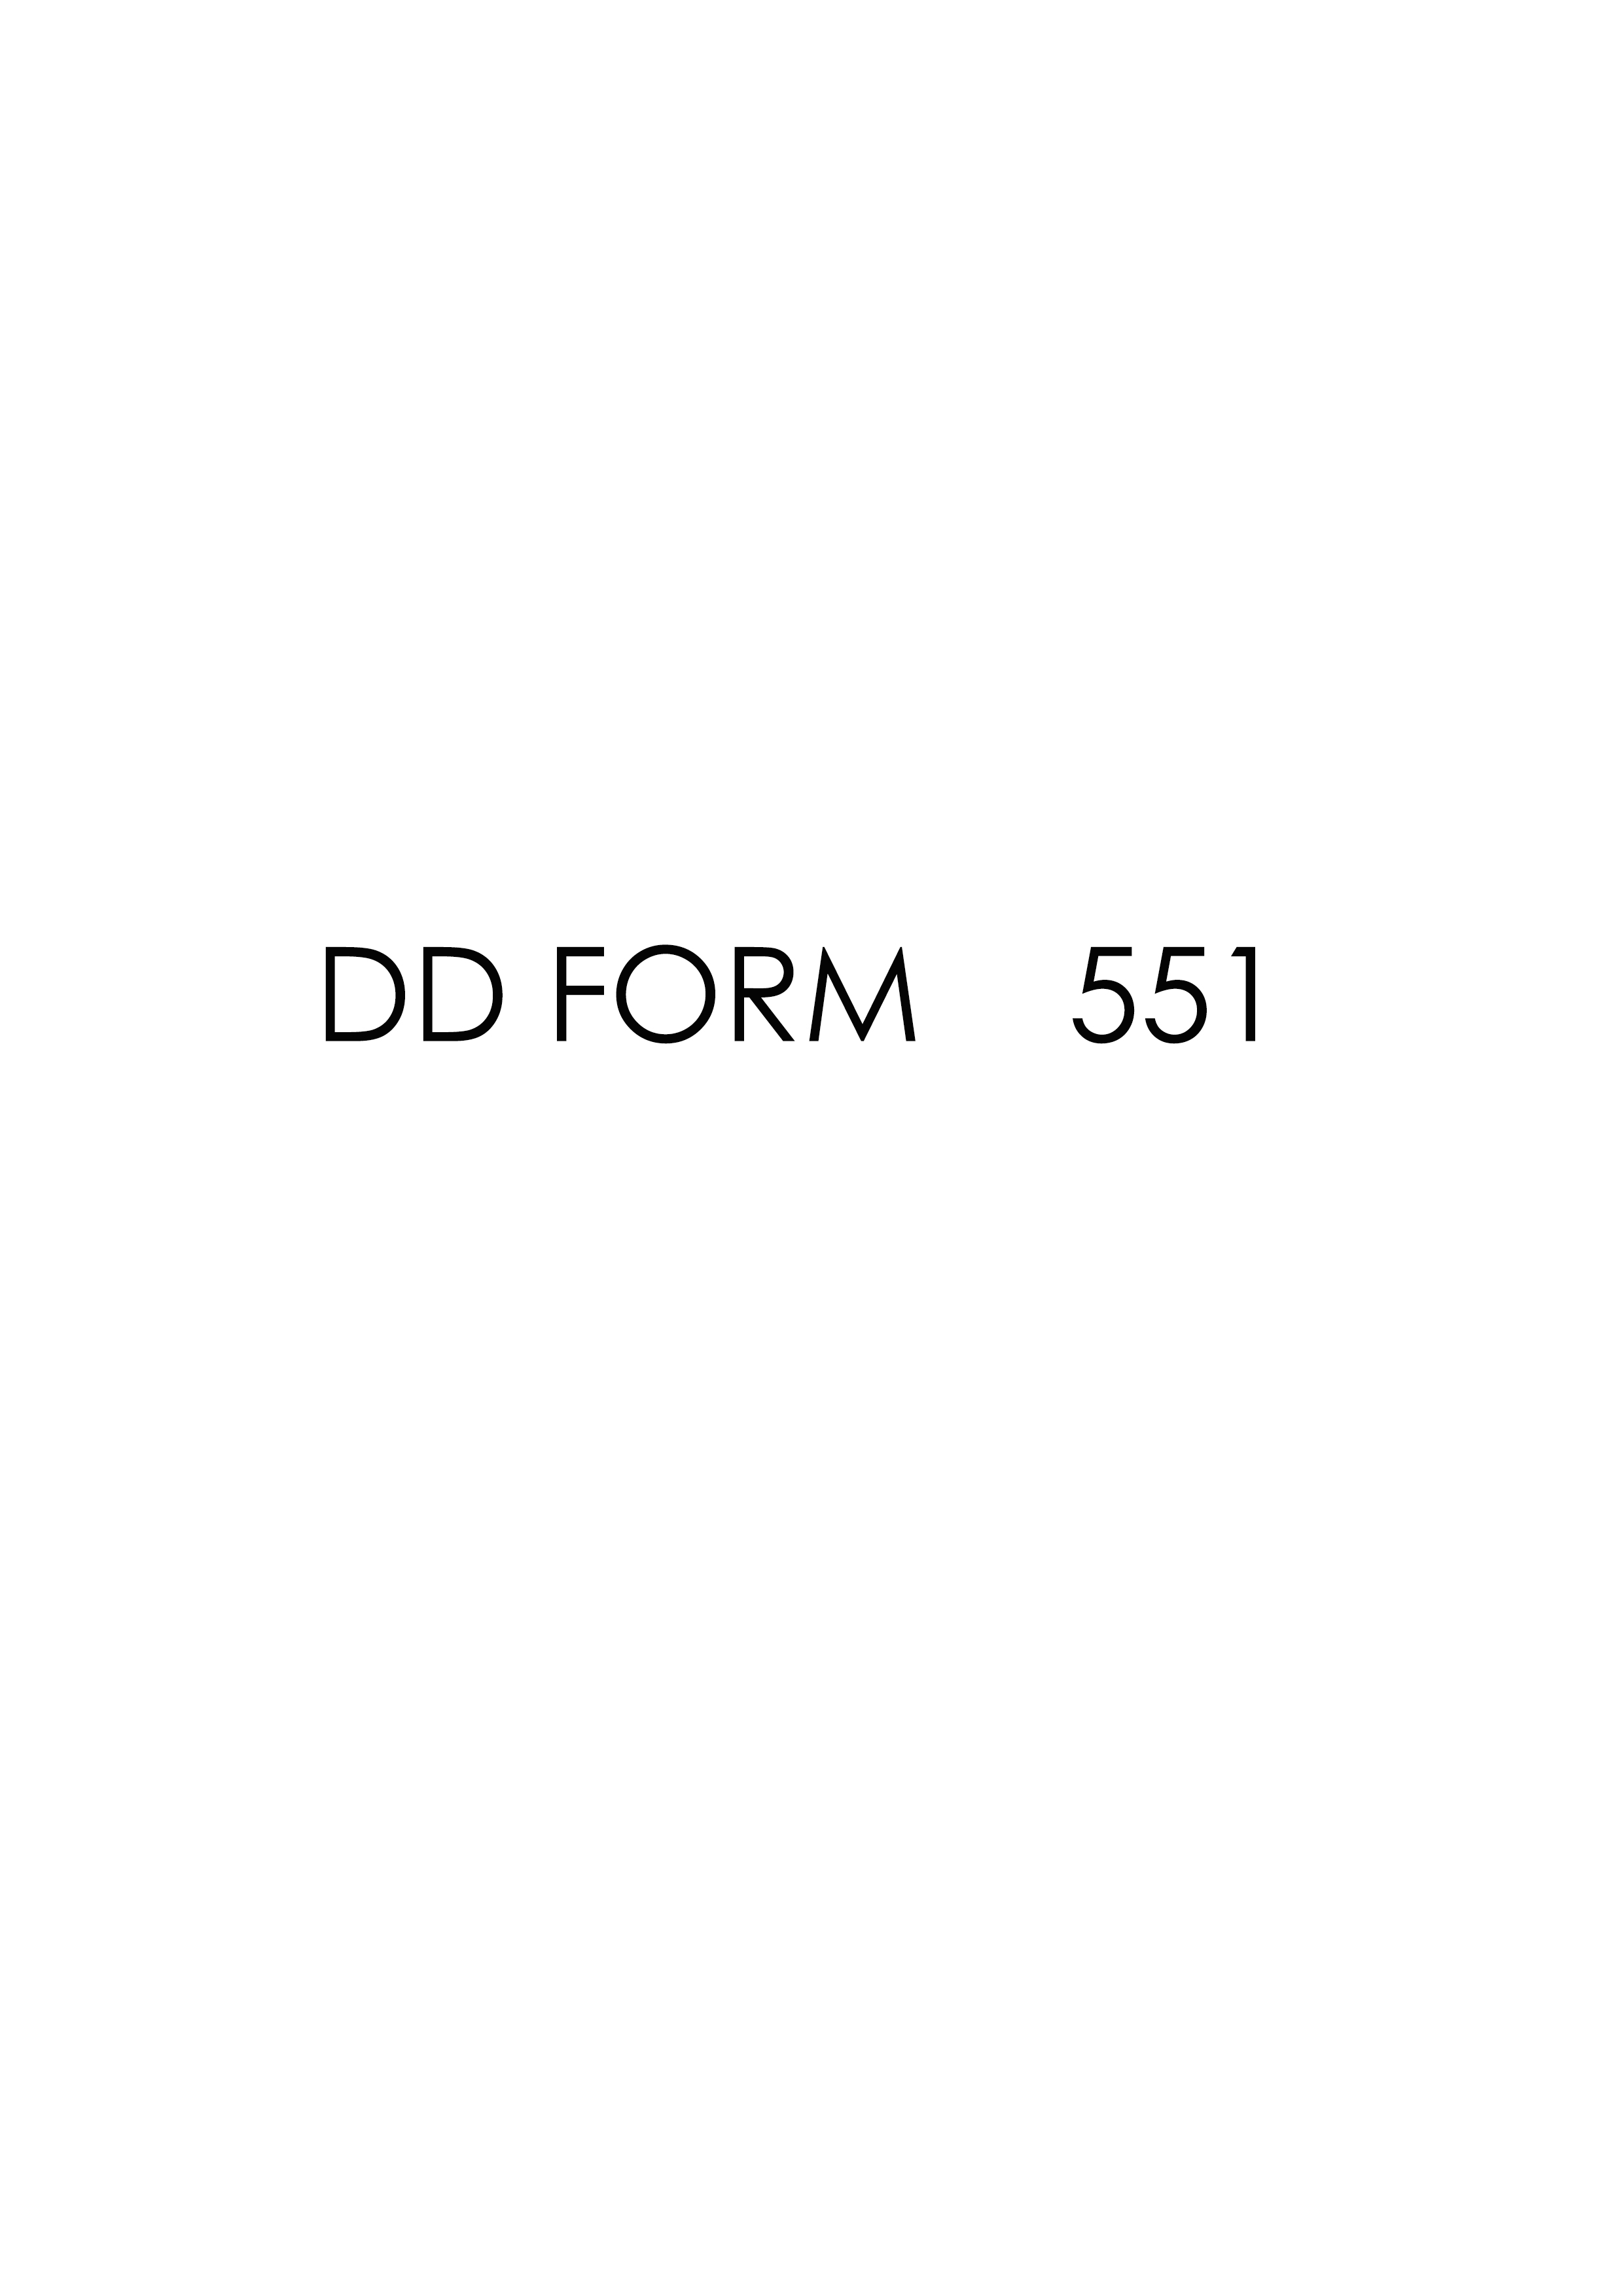 Download dd form 551